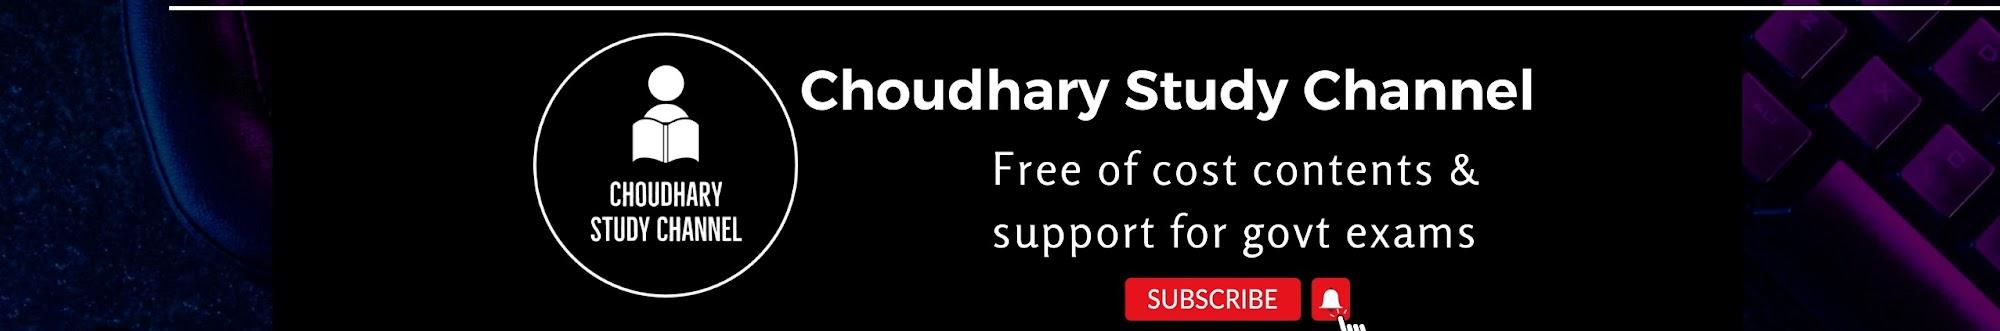 Choudhary Study Channel 